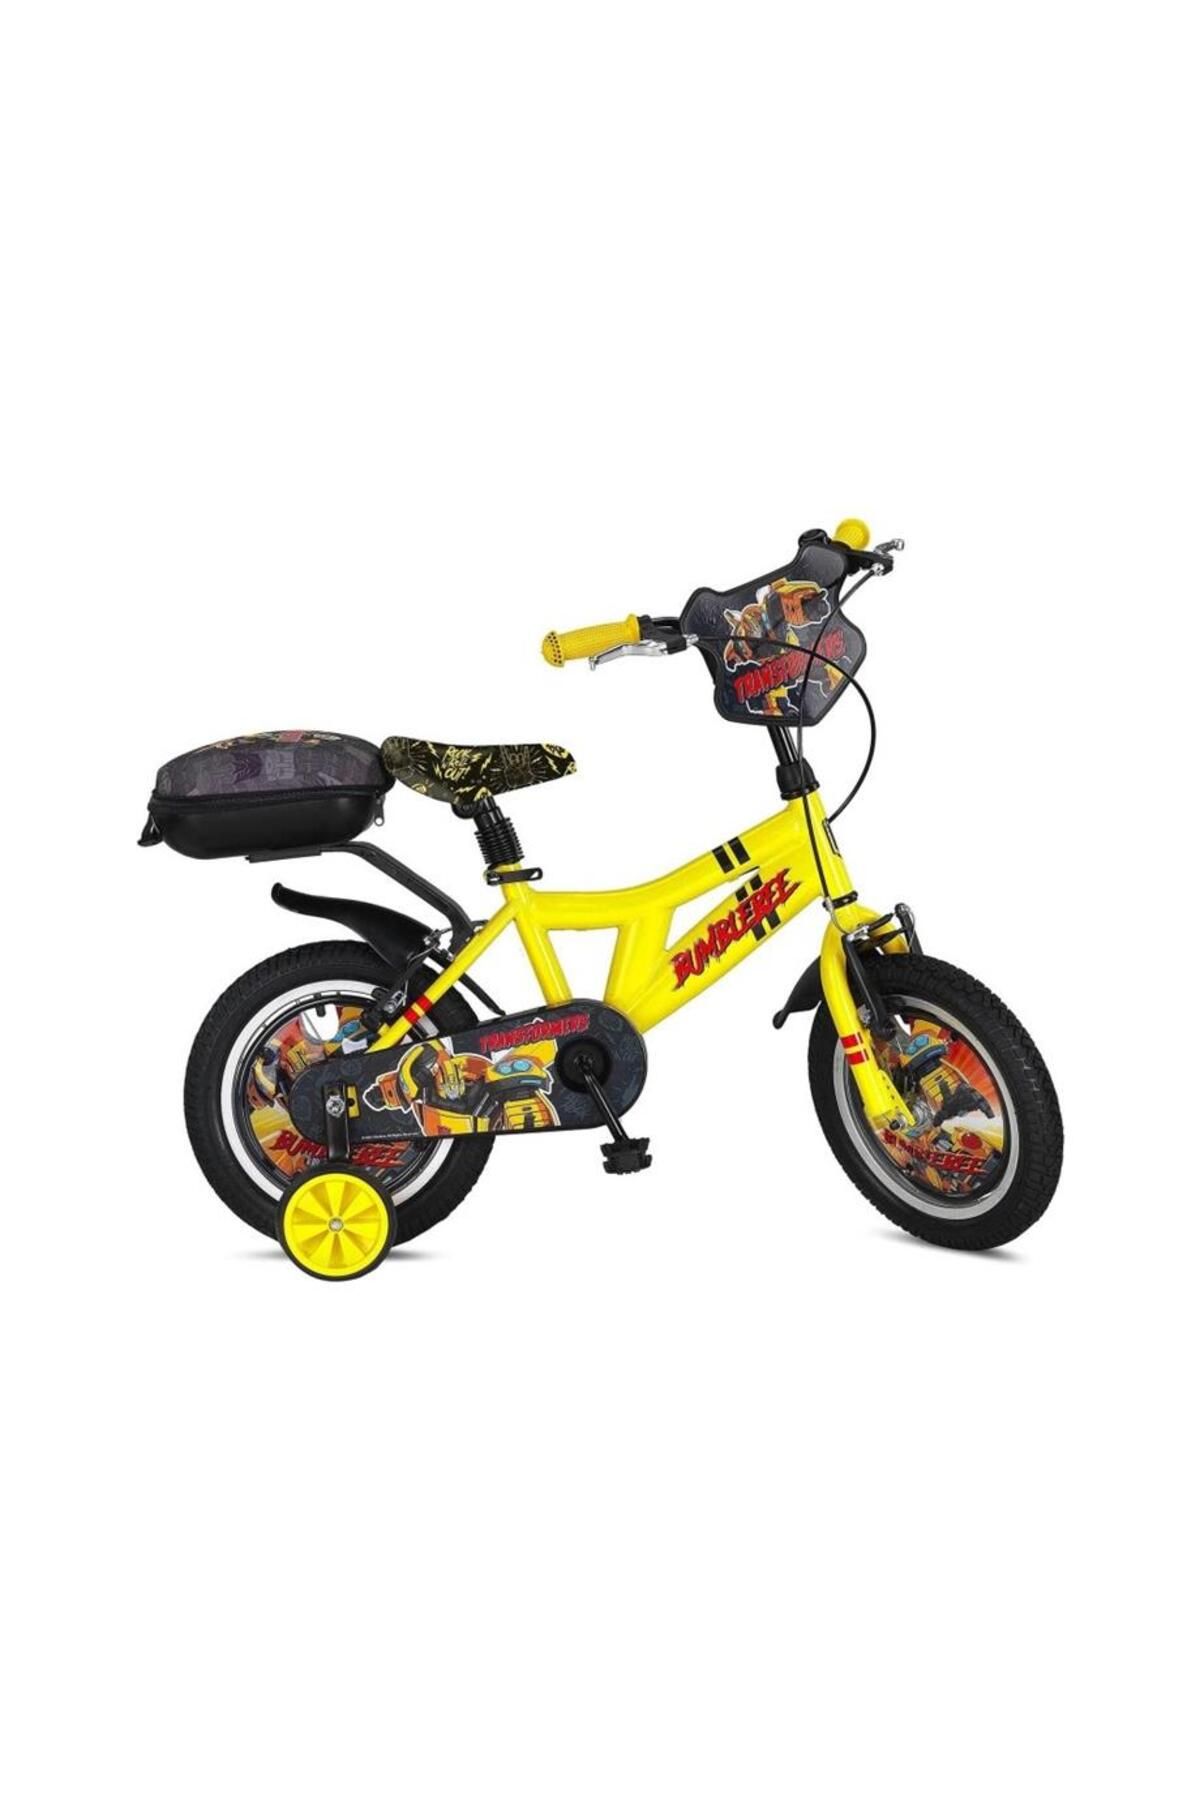 Ümit 1404 Transformers-bmx-v-erkek Çocuk Bisikleti 14 Jant